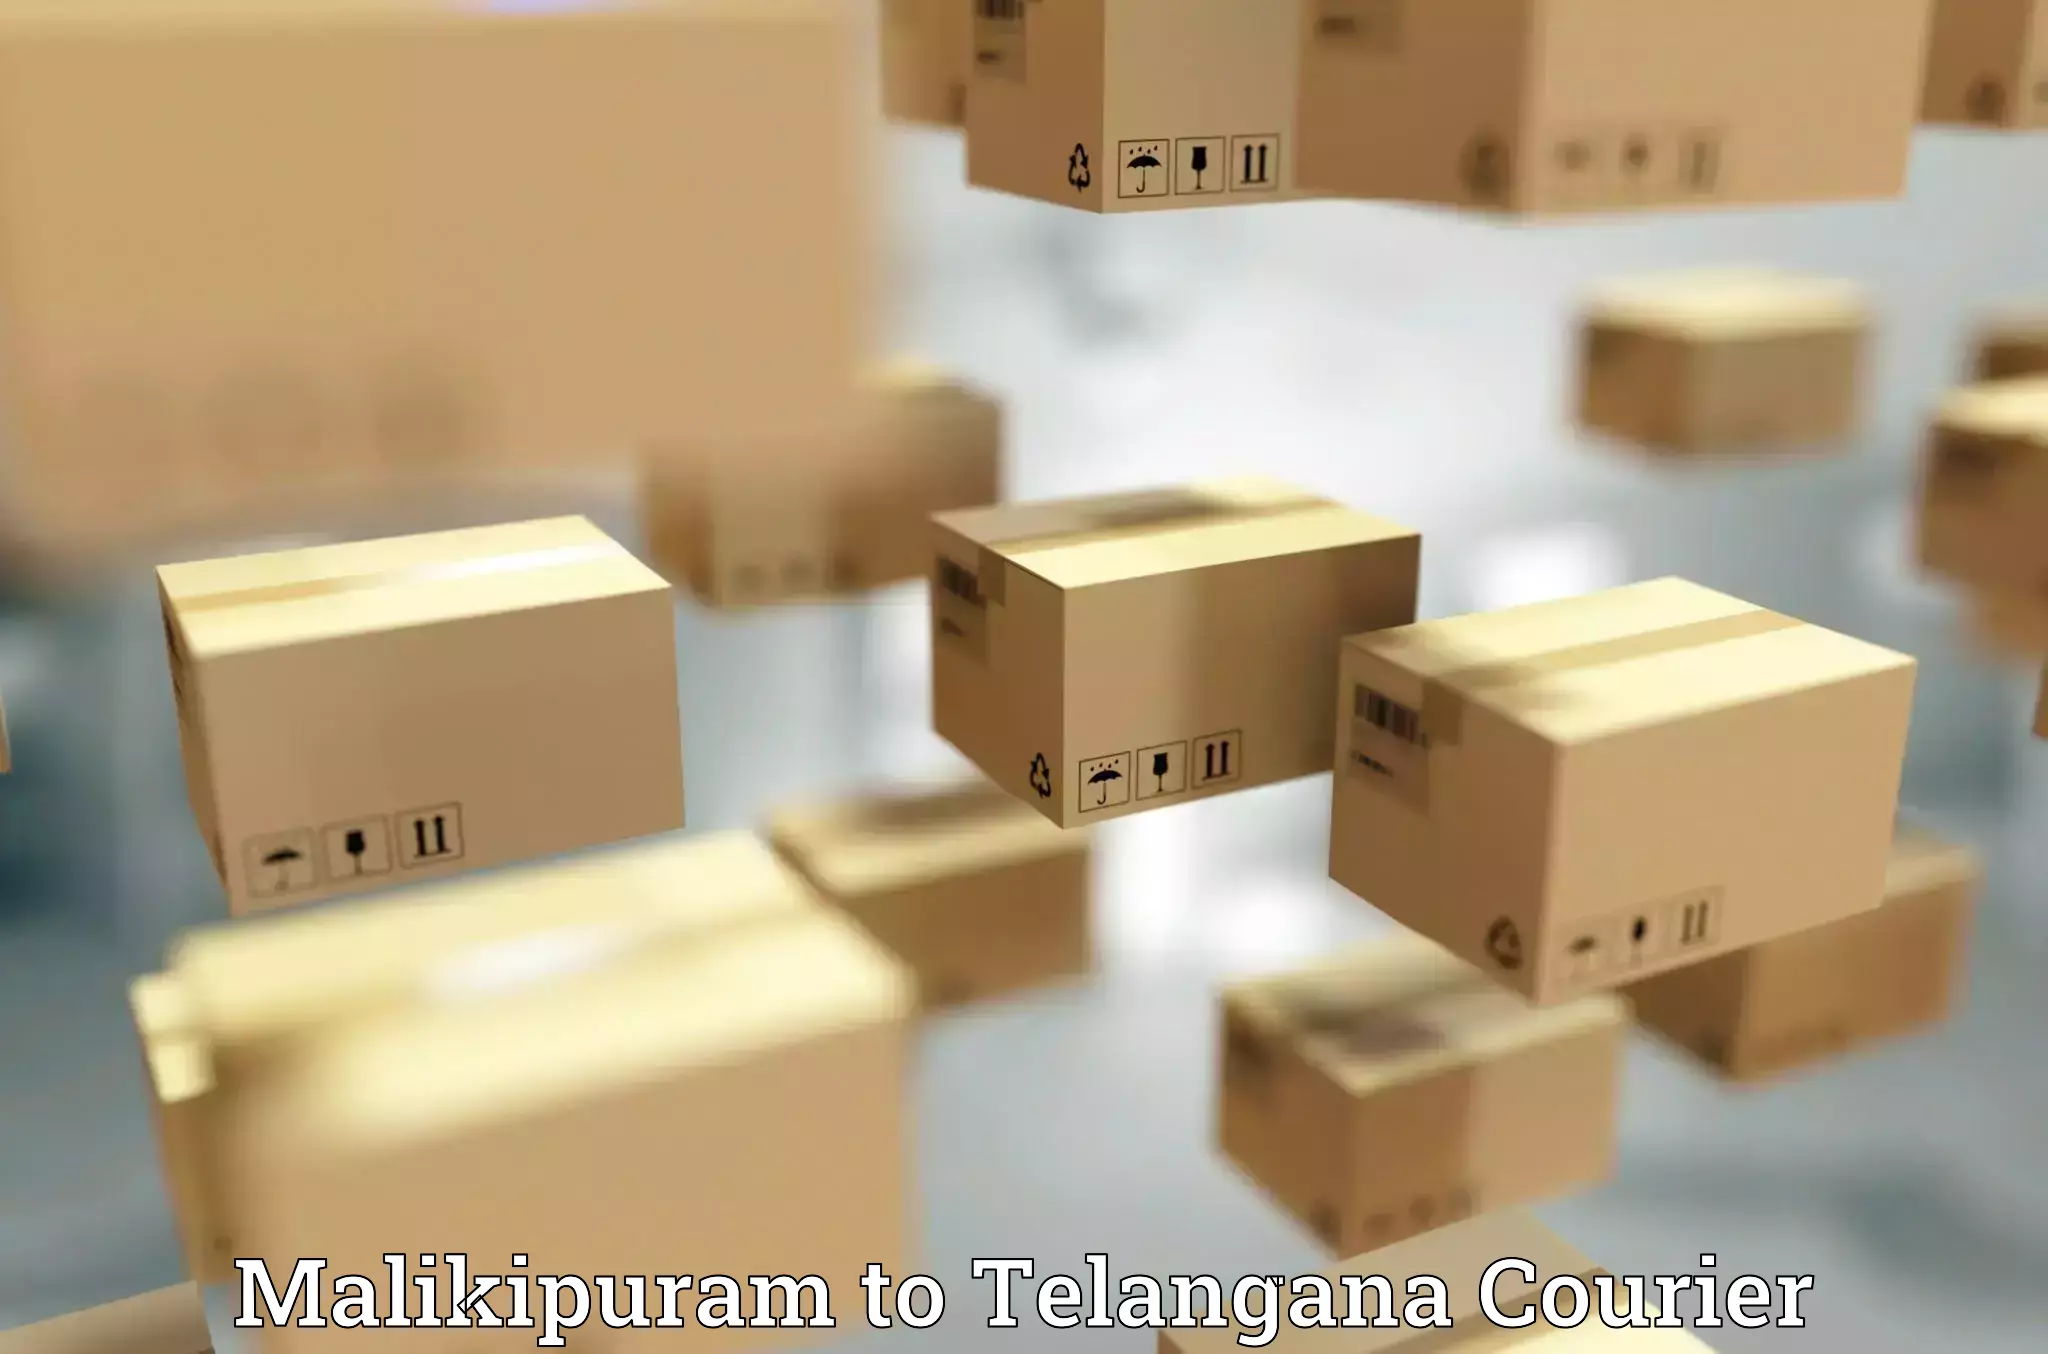 Courier service innovation Malikipuram to Bijinapalle